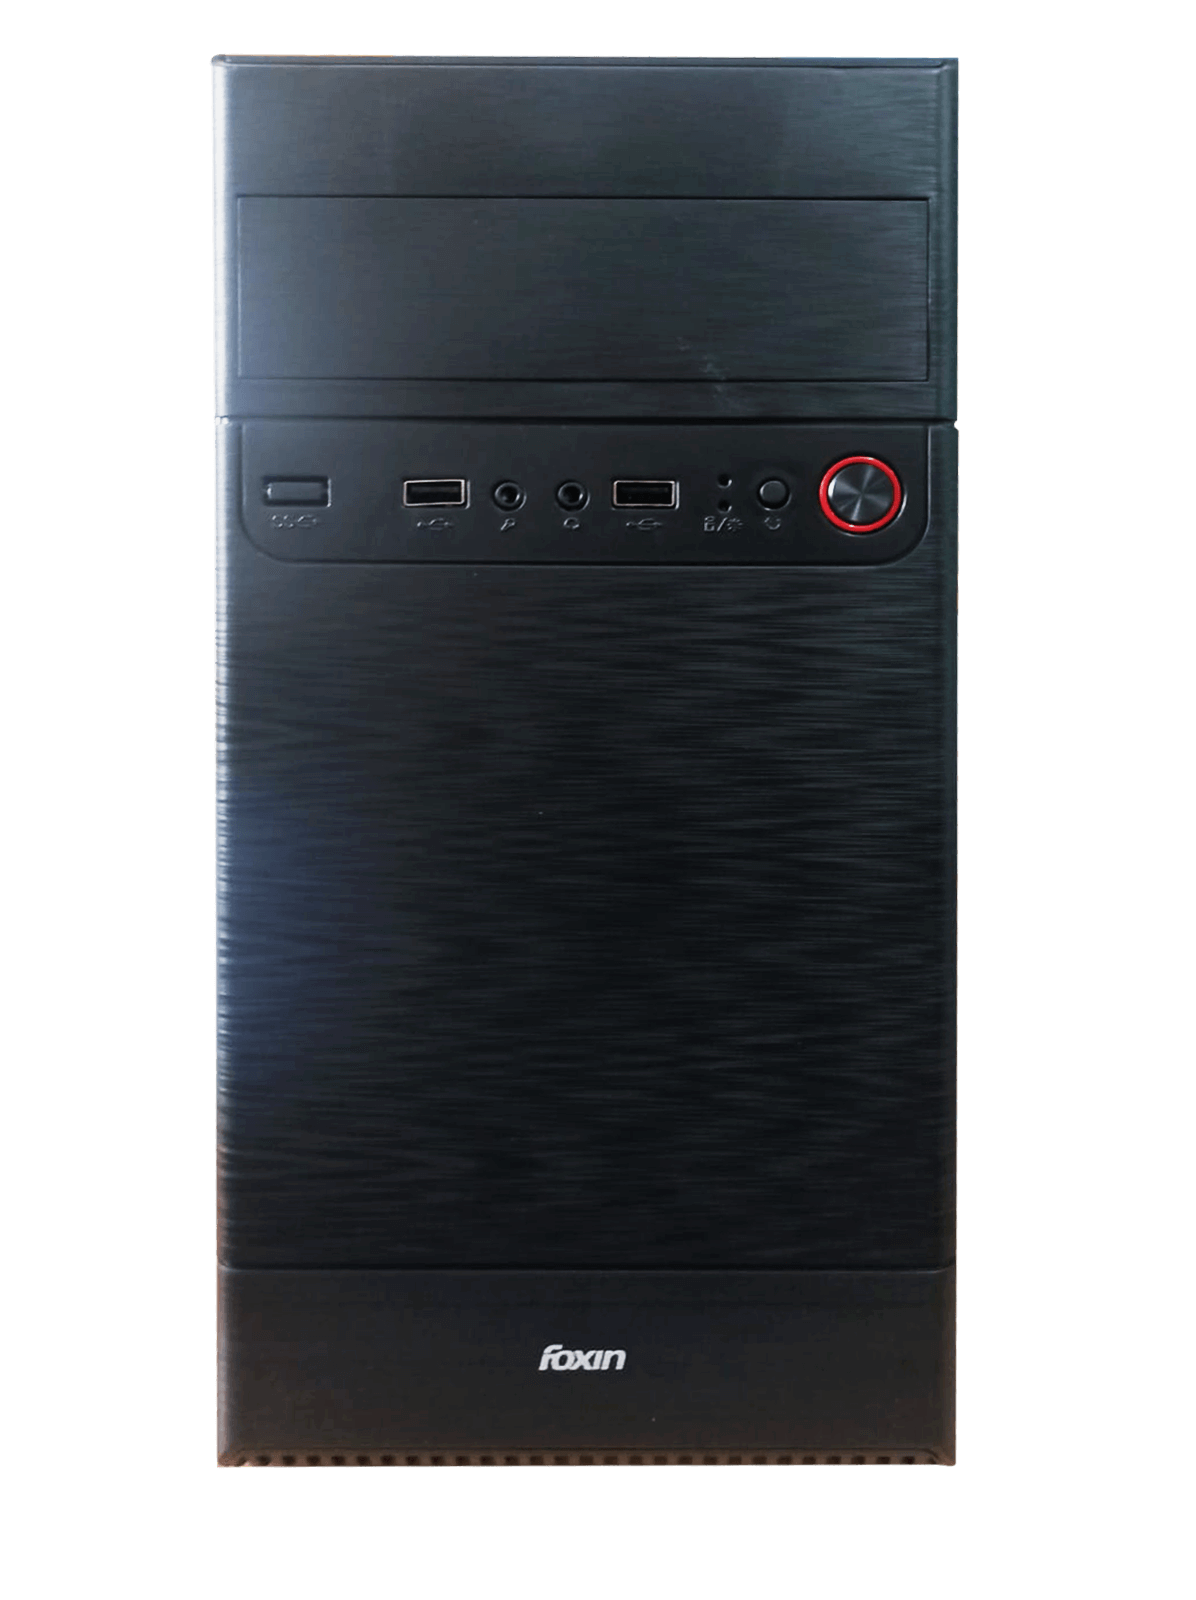 Foxin XING Desktop Computer Case/PC Cabinet - with Steel Metal Body | All Micro-ATX / Mini-ITX Compatible | Metallic Black